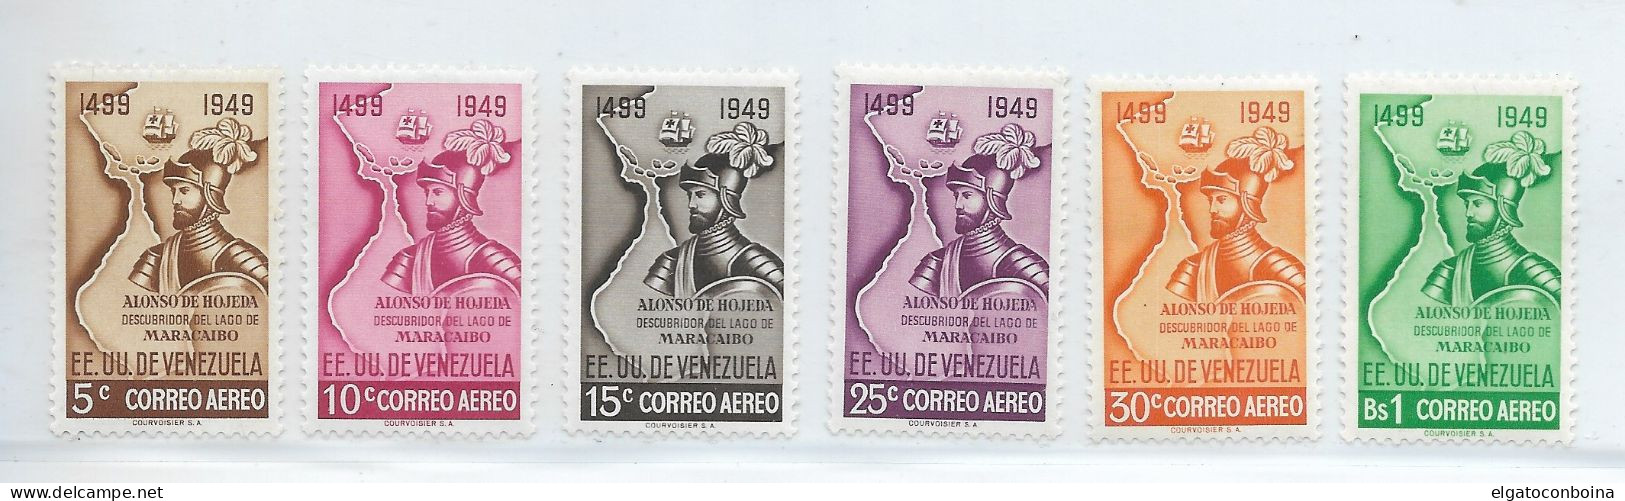 VENEZUELA 1950 ALONSO DE OJEDA AIRMAIL SET MILITARY HISTORICAL FIGURES MI602-7 SC C316-21 MNH - Venezuela